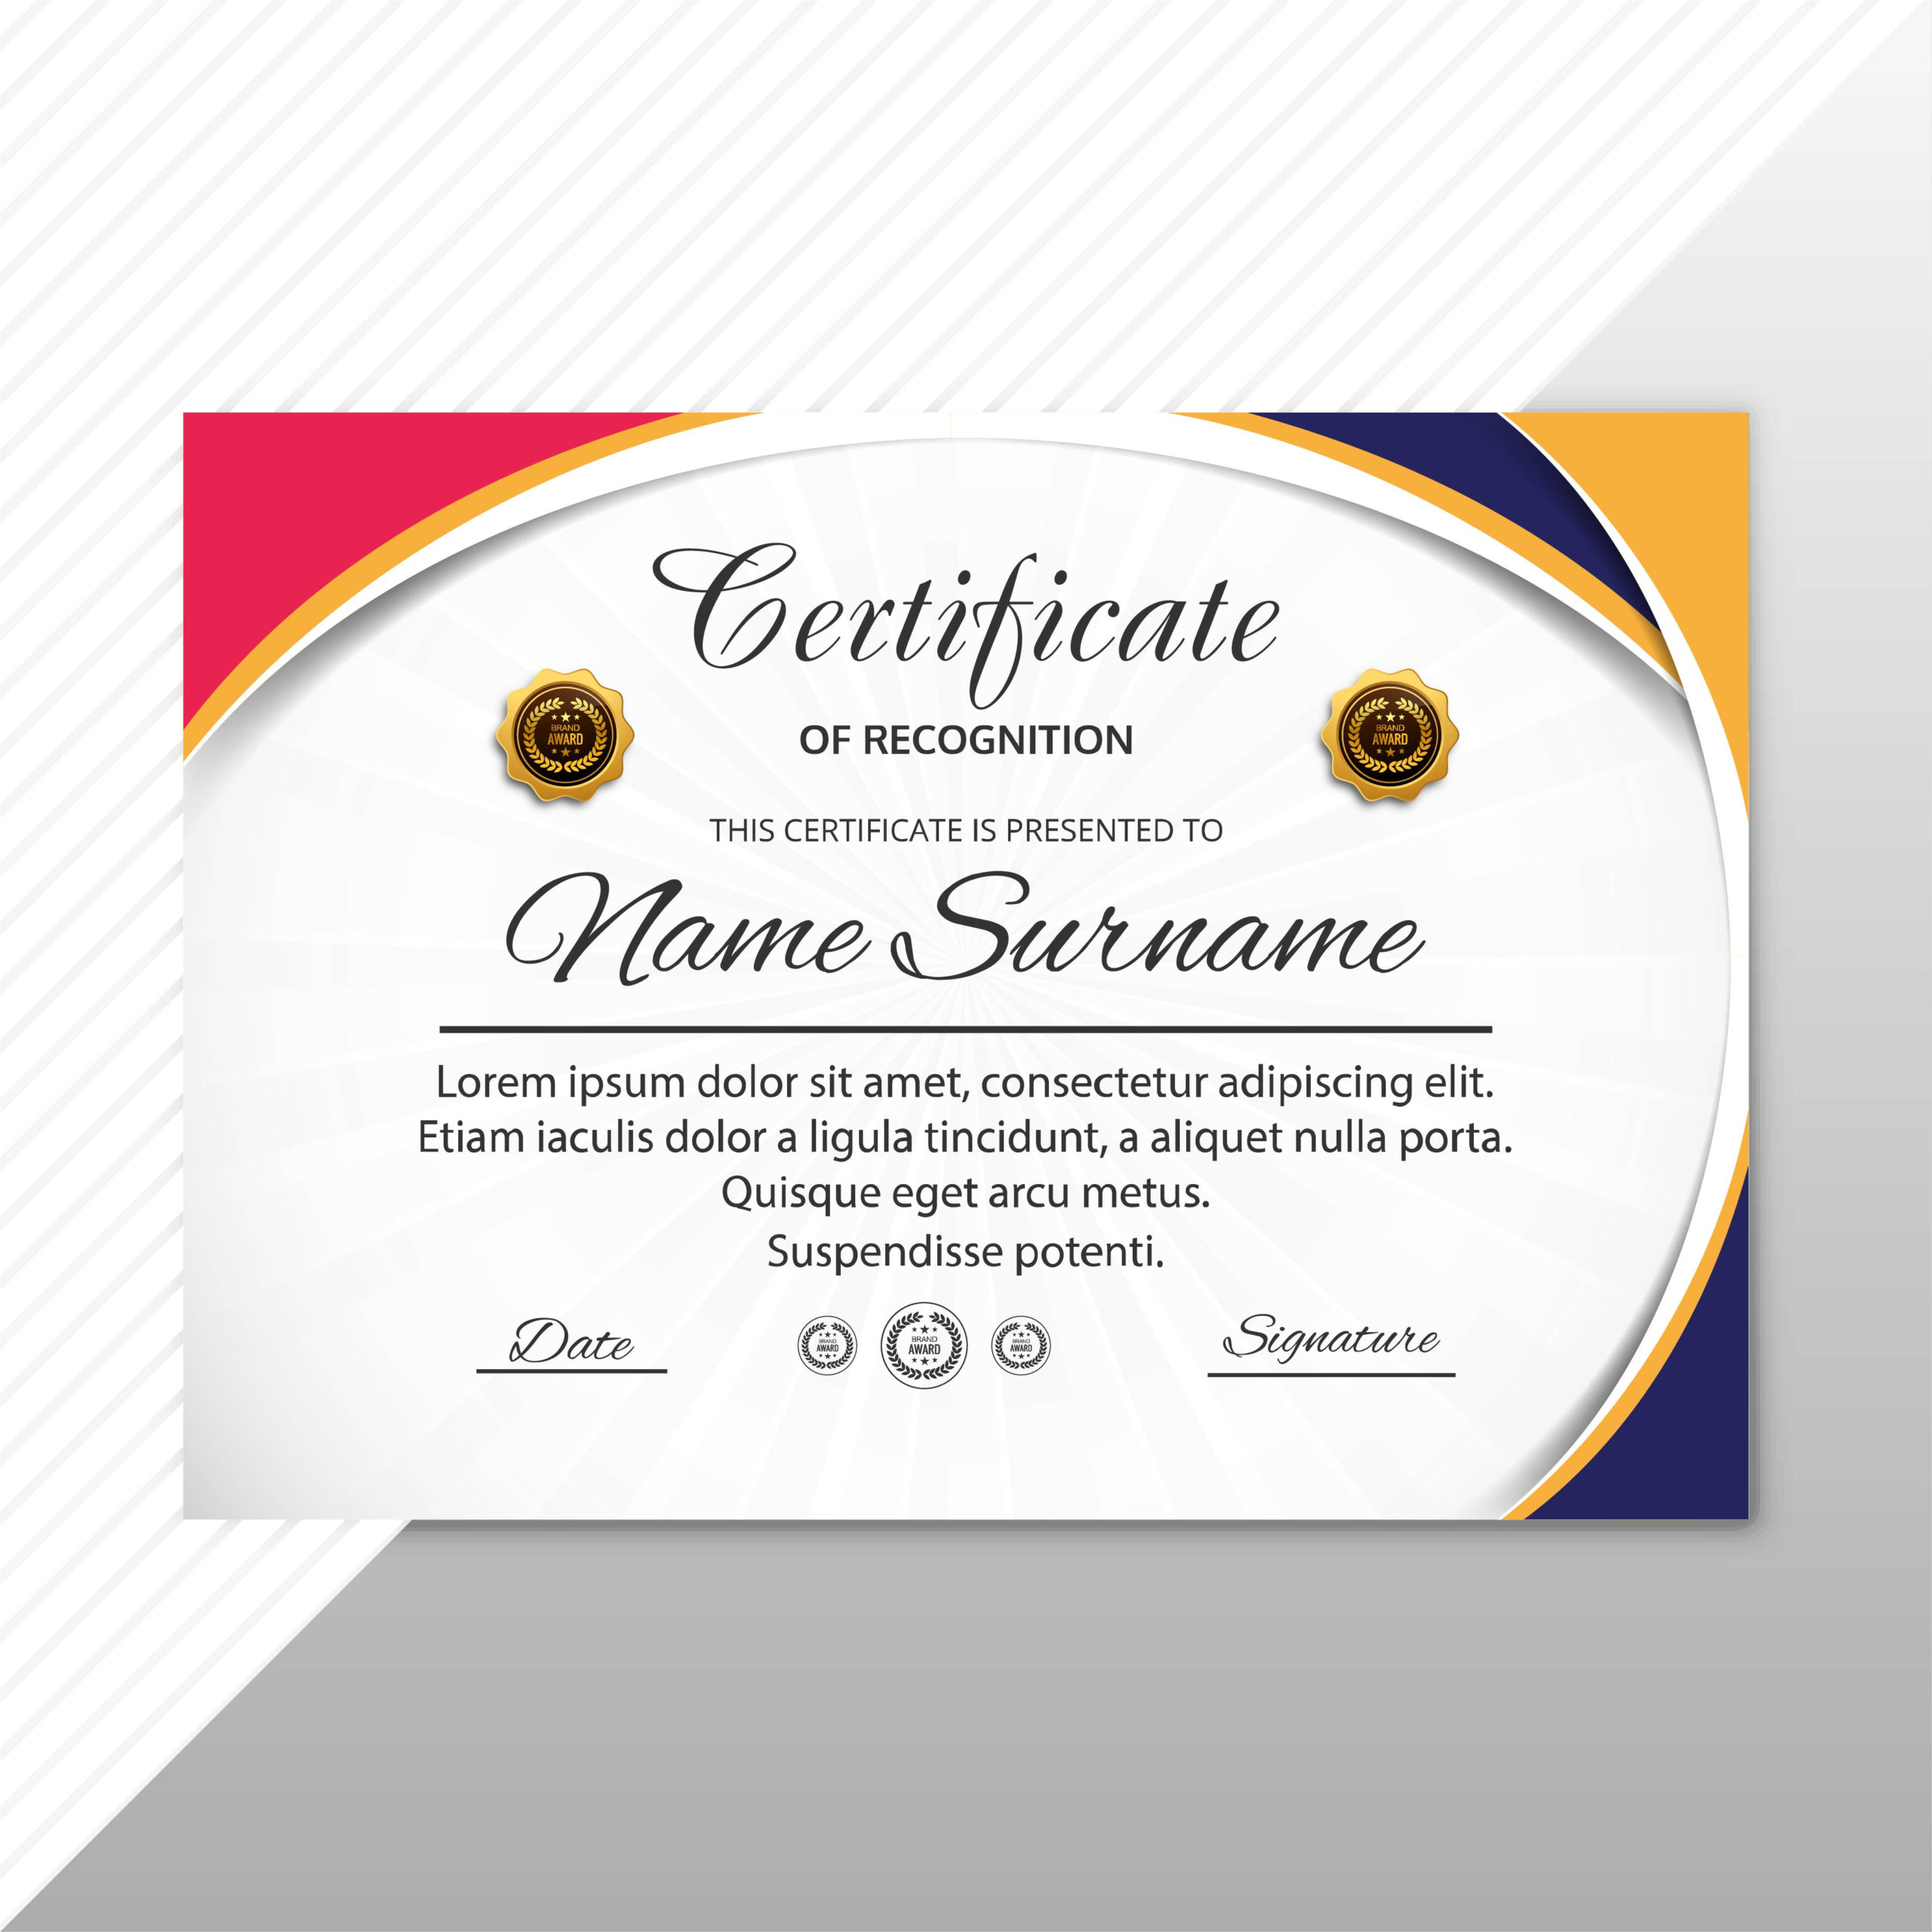 9 Printable Certificate Designs | Certificate Template Inside Leadership Certificate Template Designs